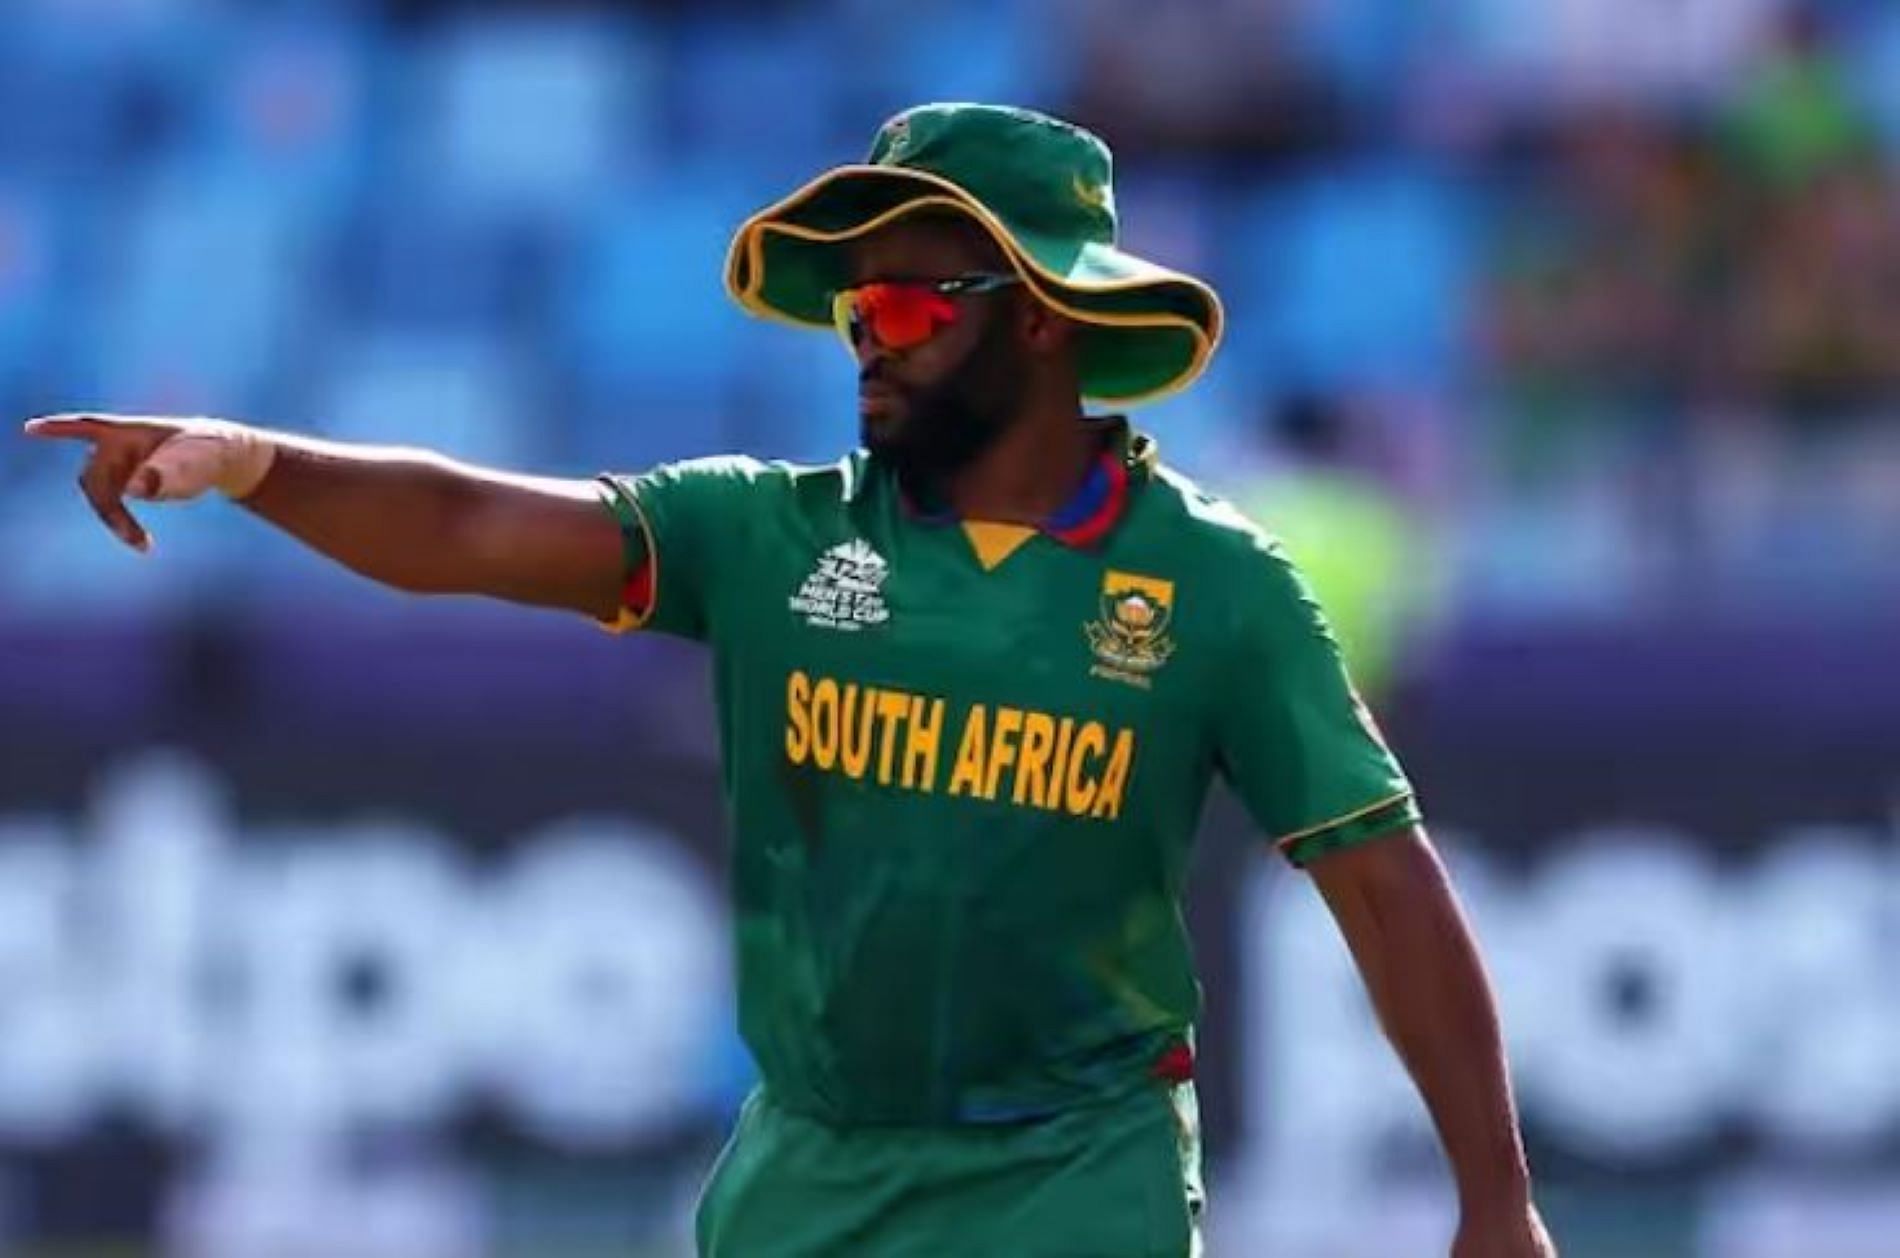 Bavuma will be back leading South Africa against Pakistan